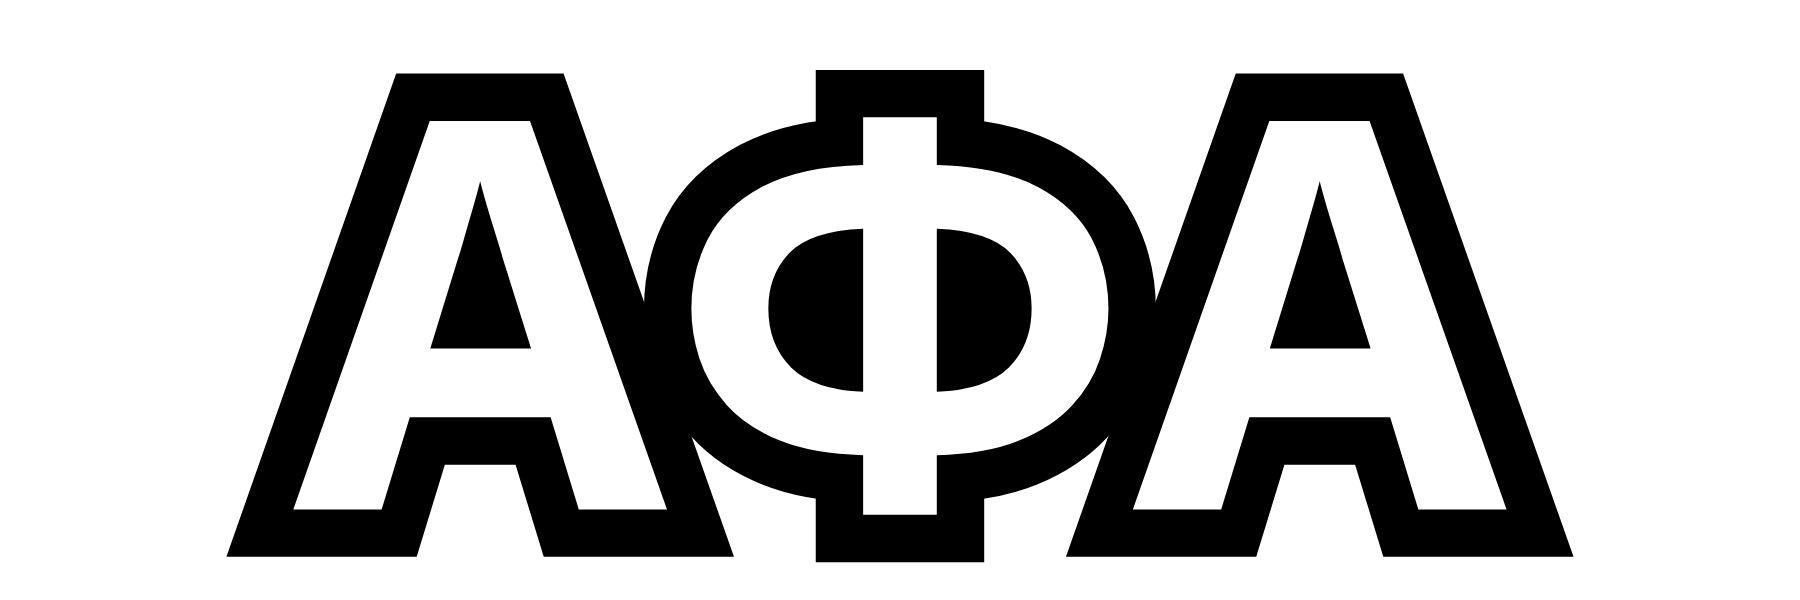 alpha phi alpha letters